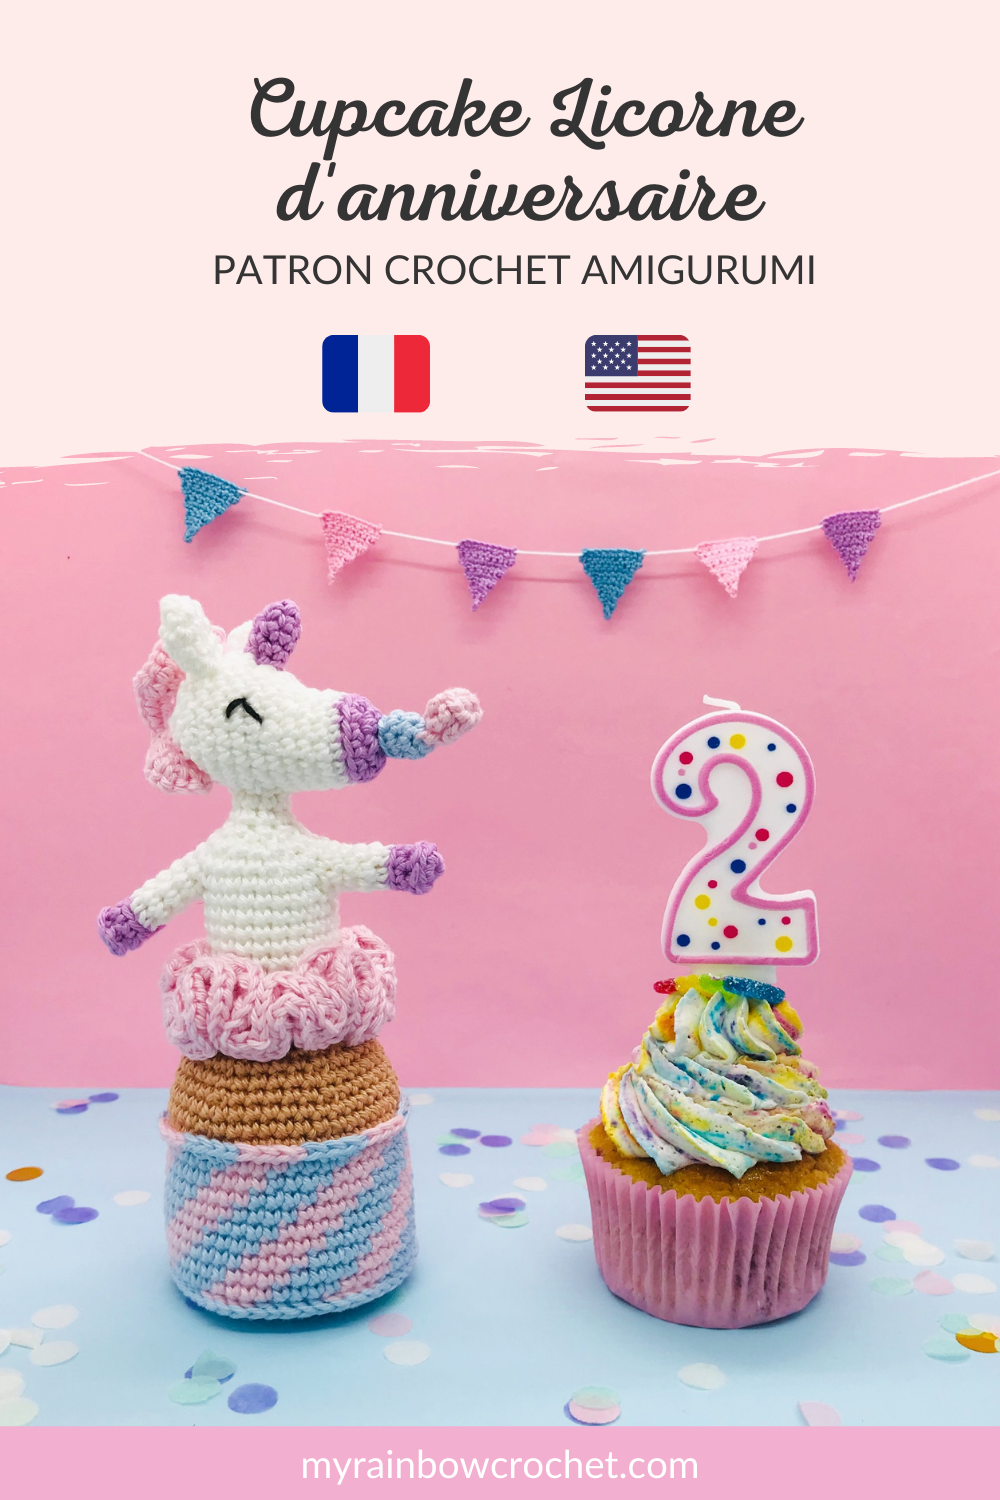 patron crochet cupcake licorne